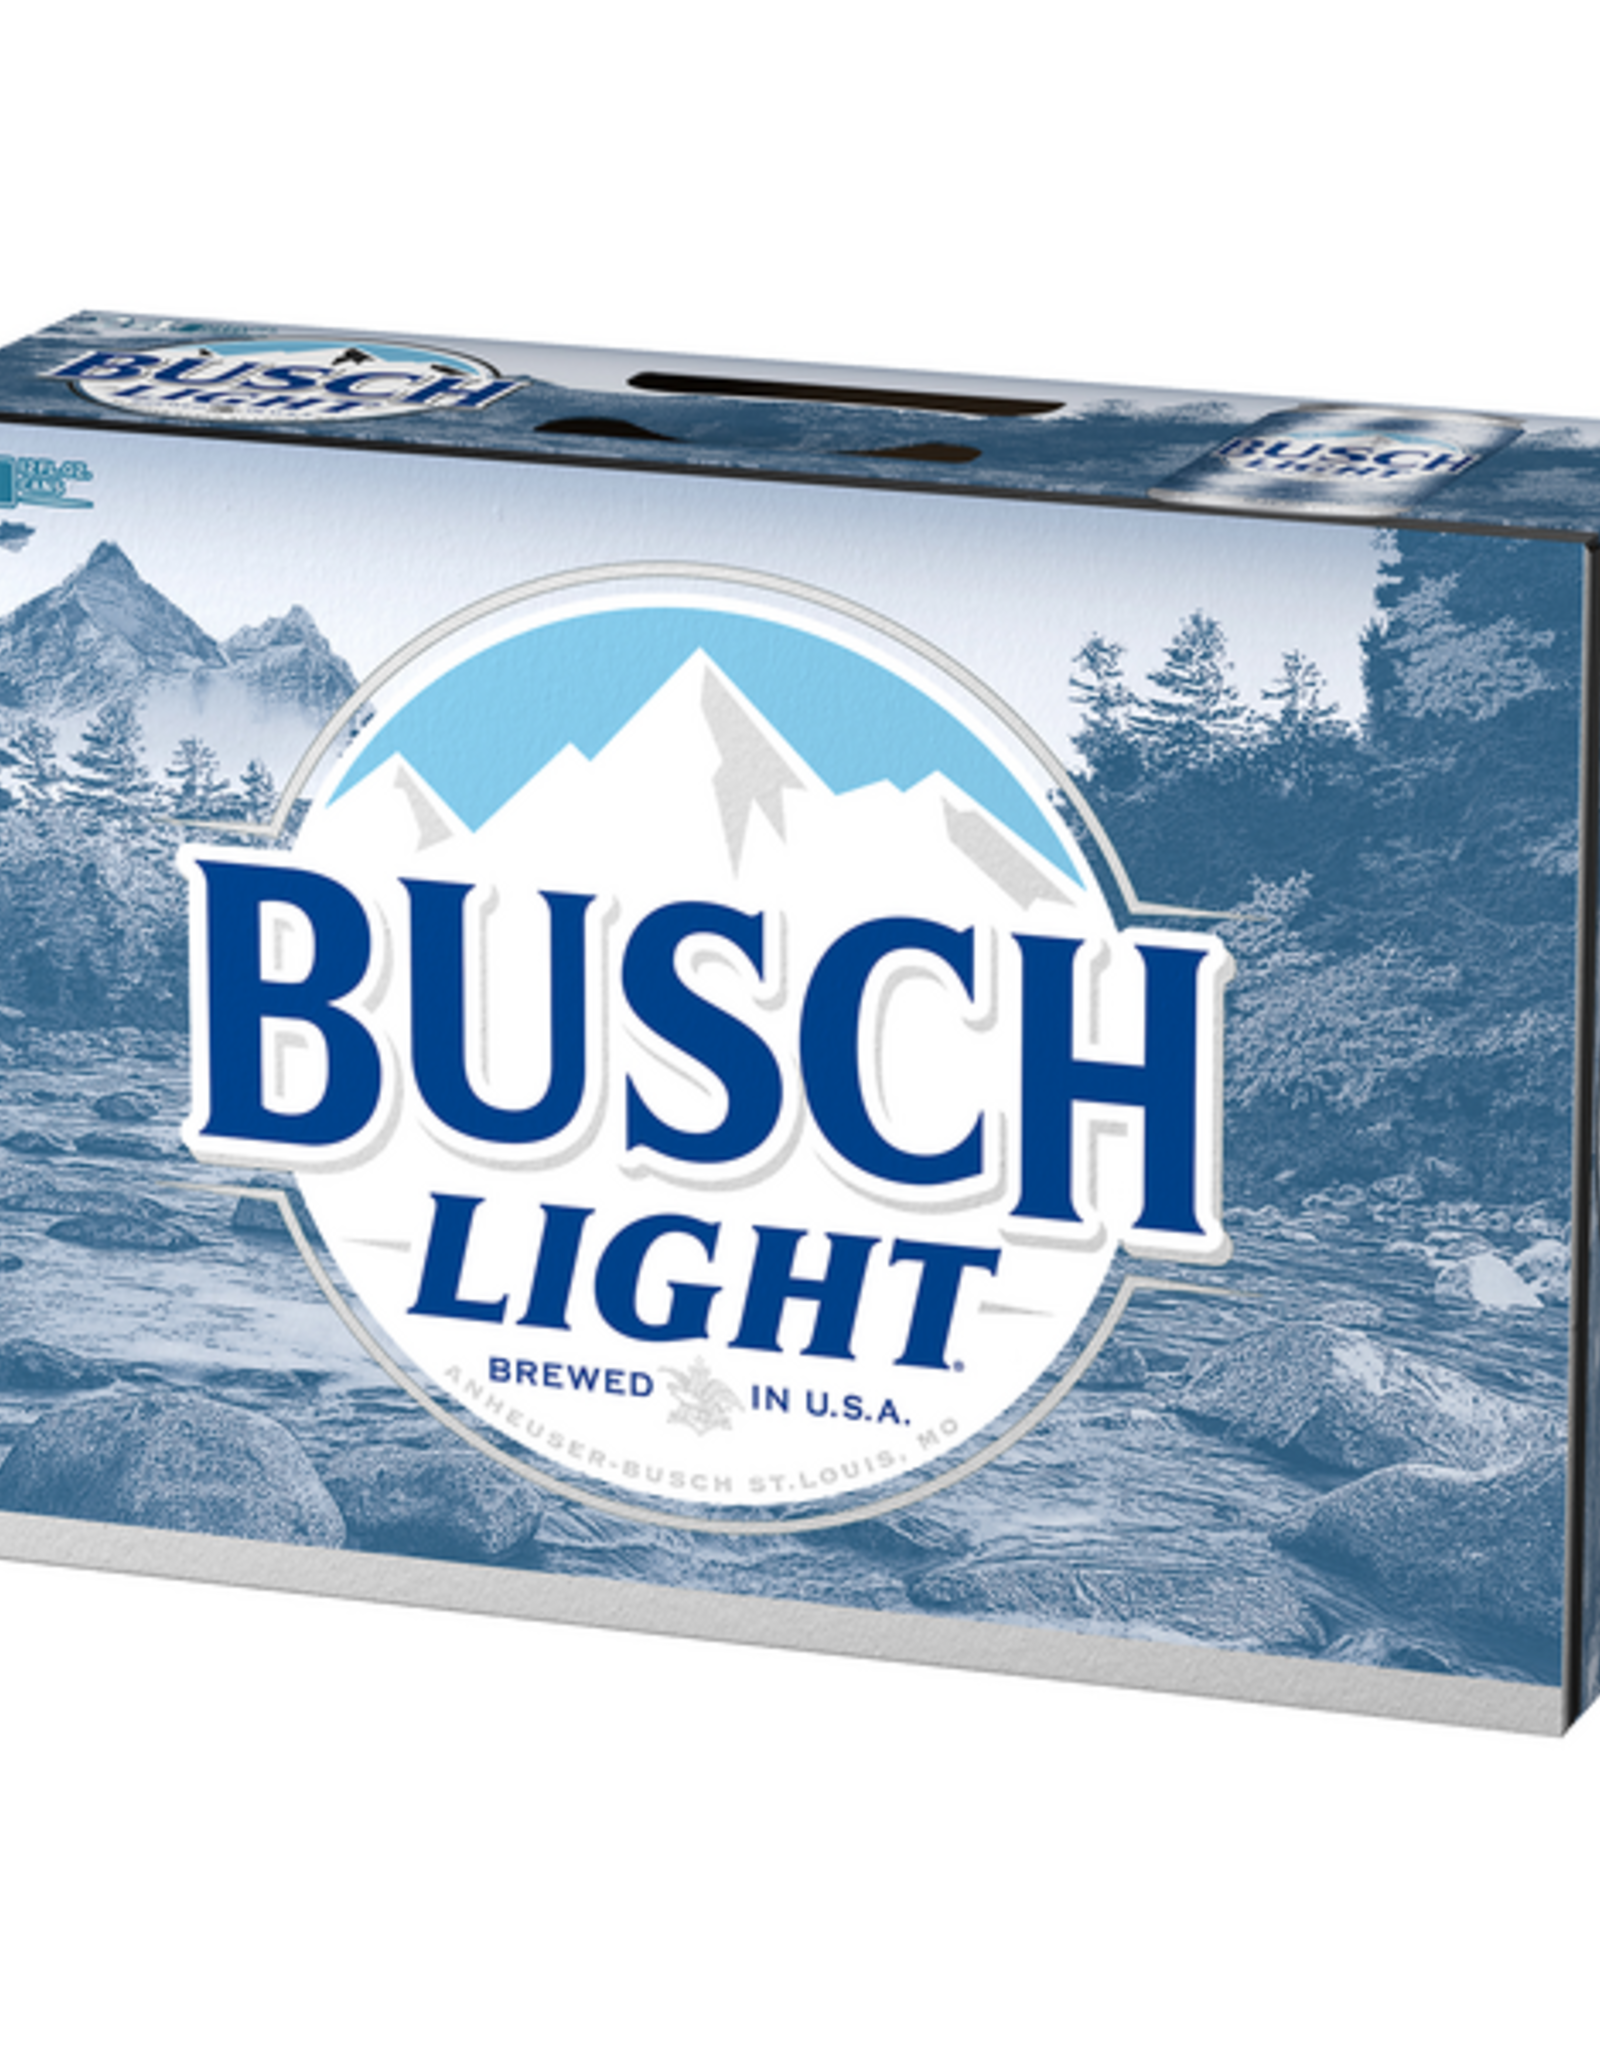 Busch 24x12 oz cans